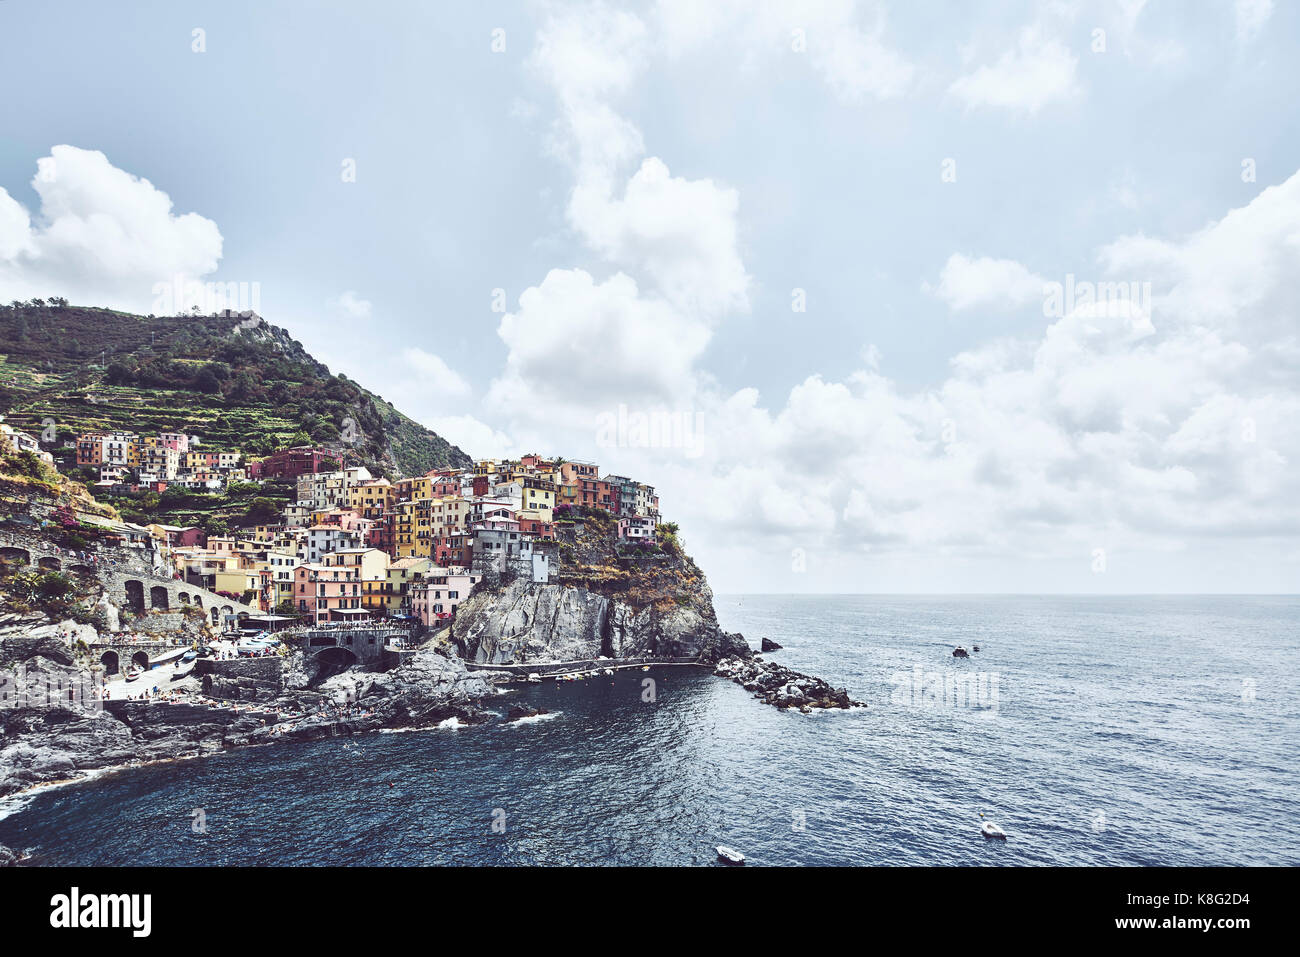 Elevated view of coastal clifftop town, Manarola, Liguria, Italy Stock Photo